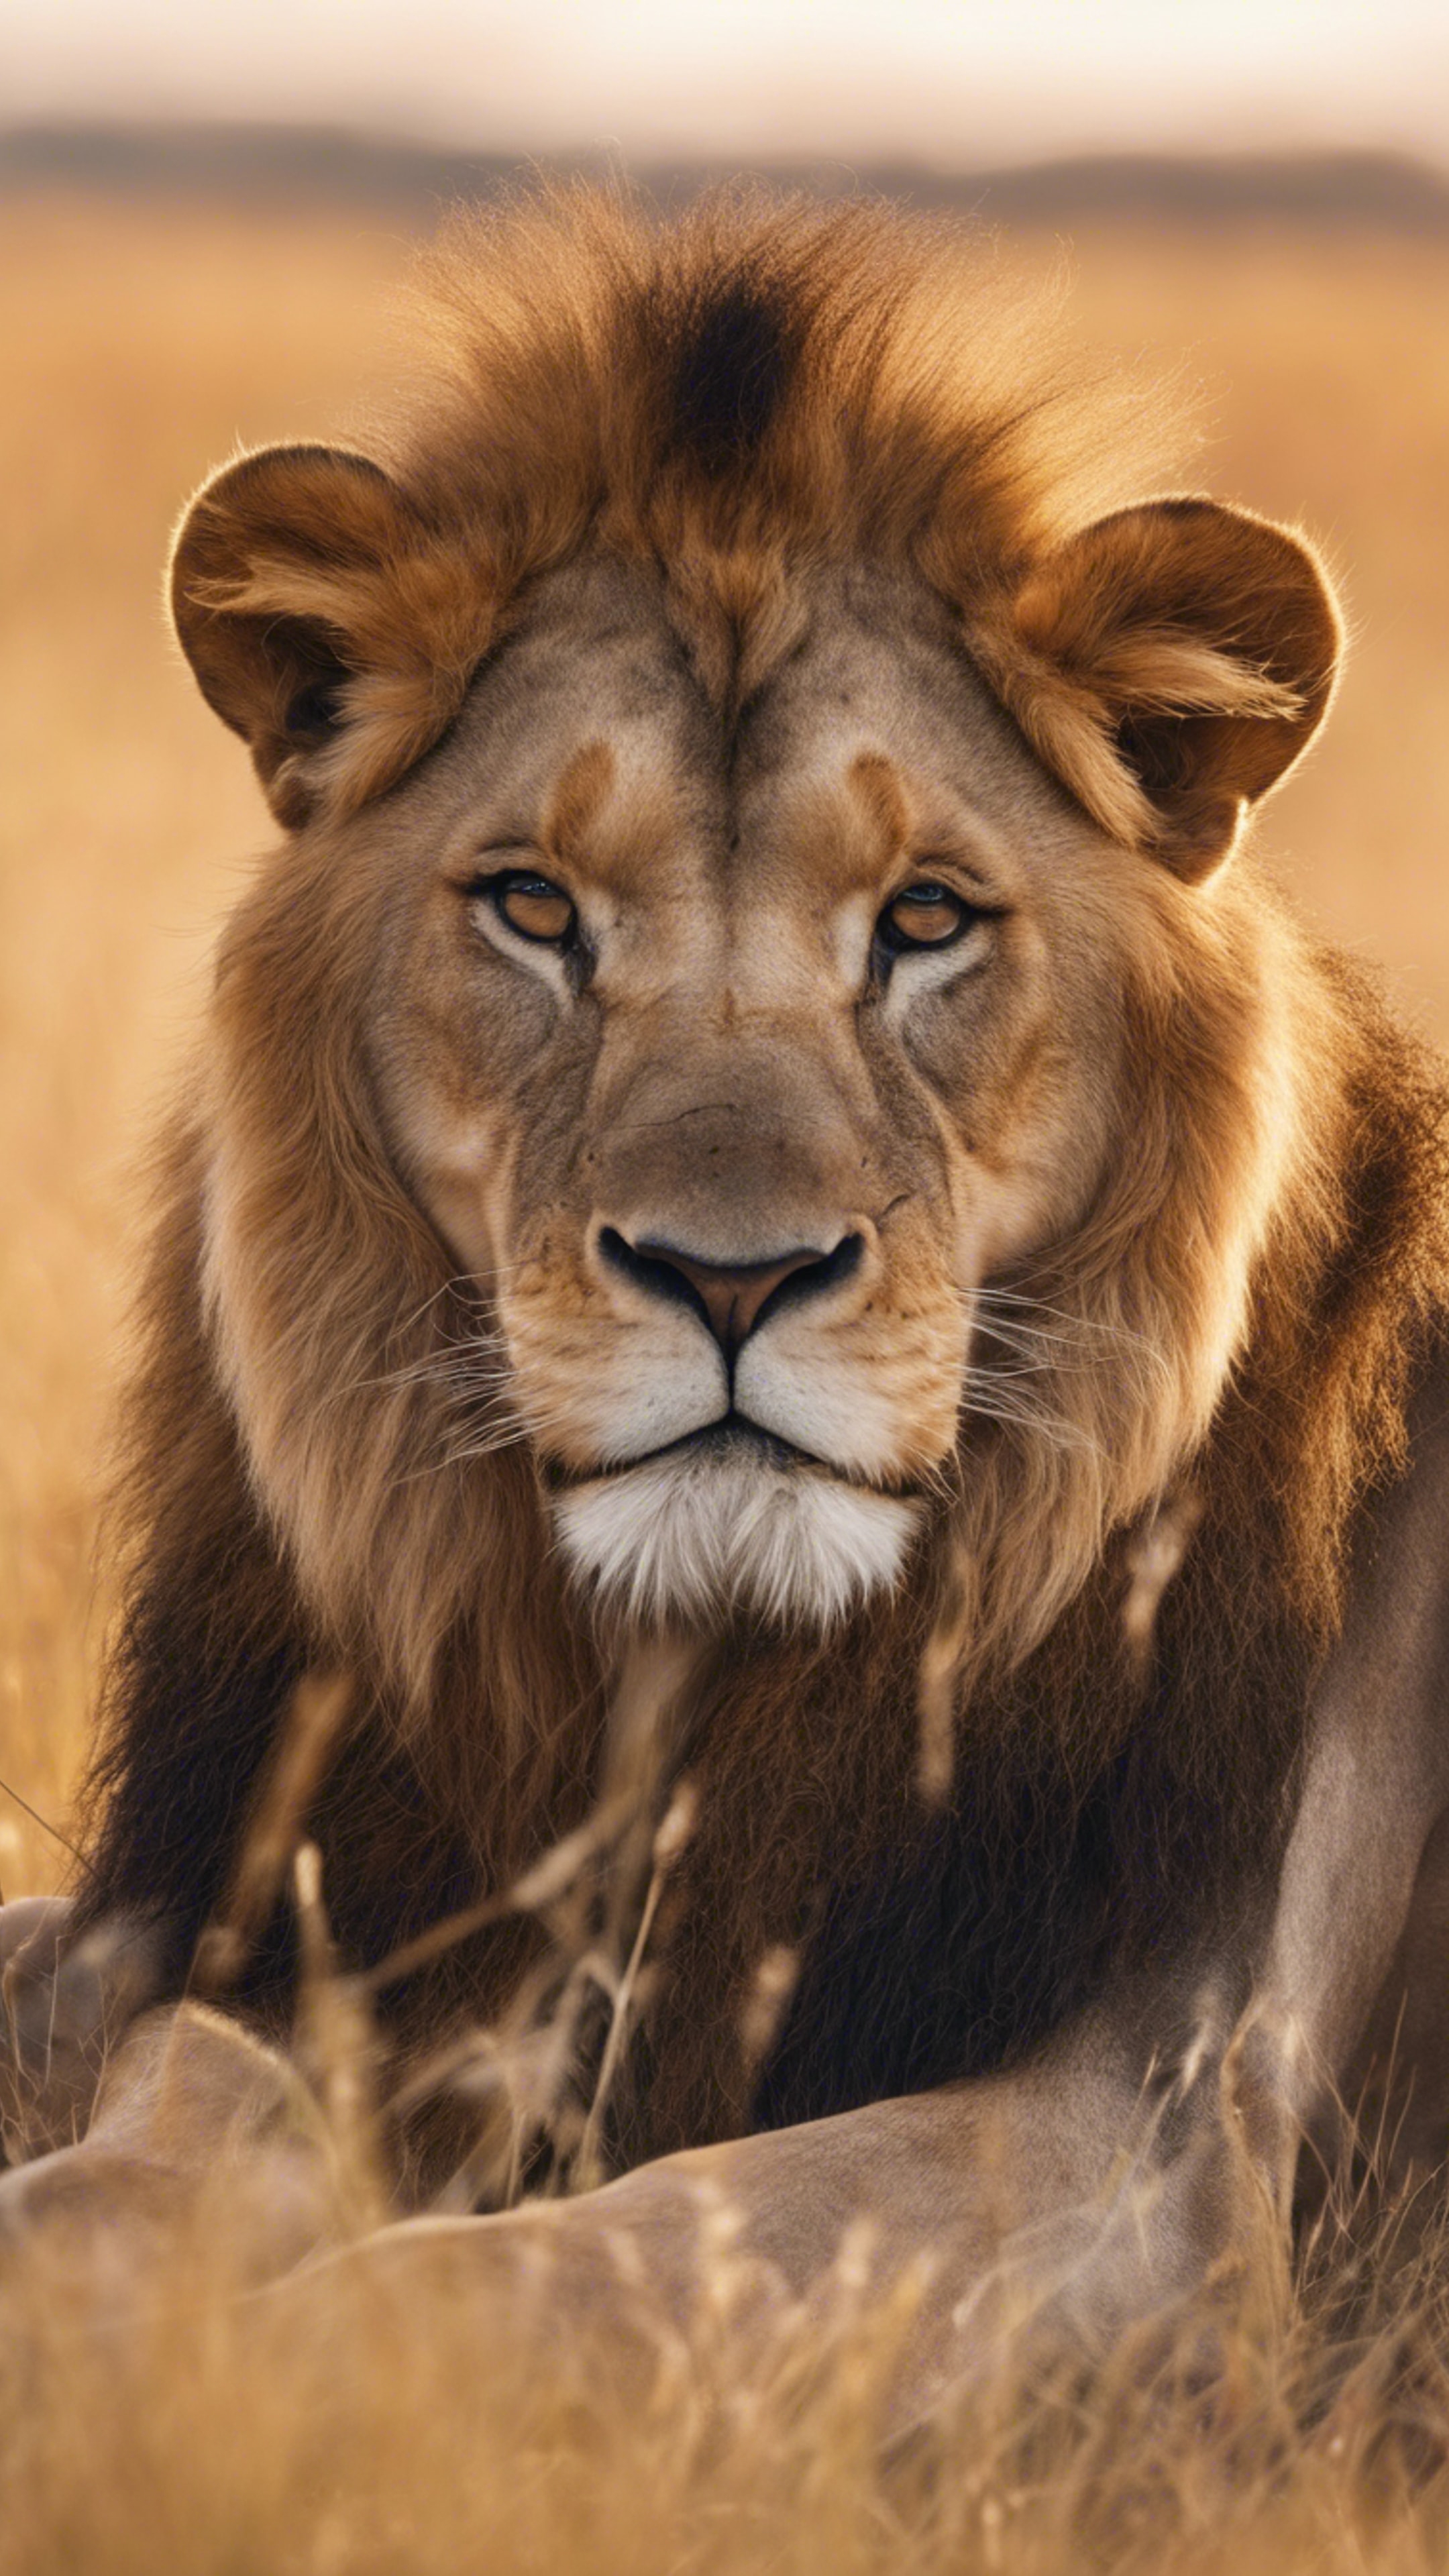 An African Lion sitting still in the golden grasslands during sunset.壁紙[5c36367da6ef412794b5]